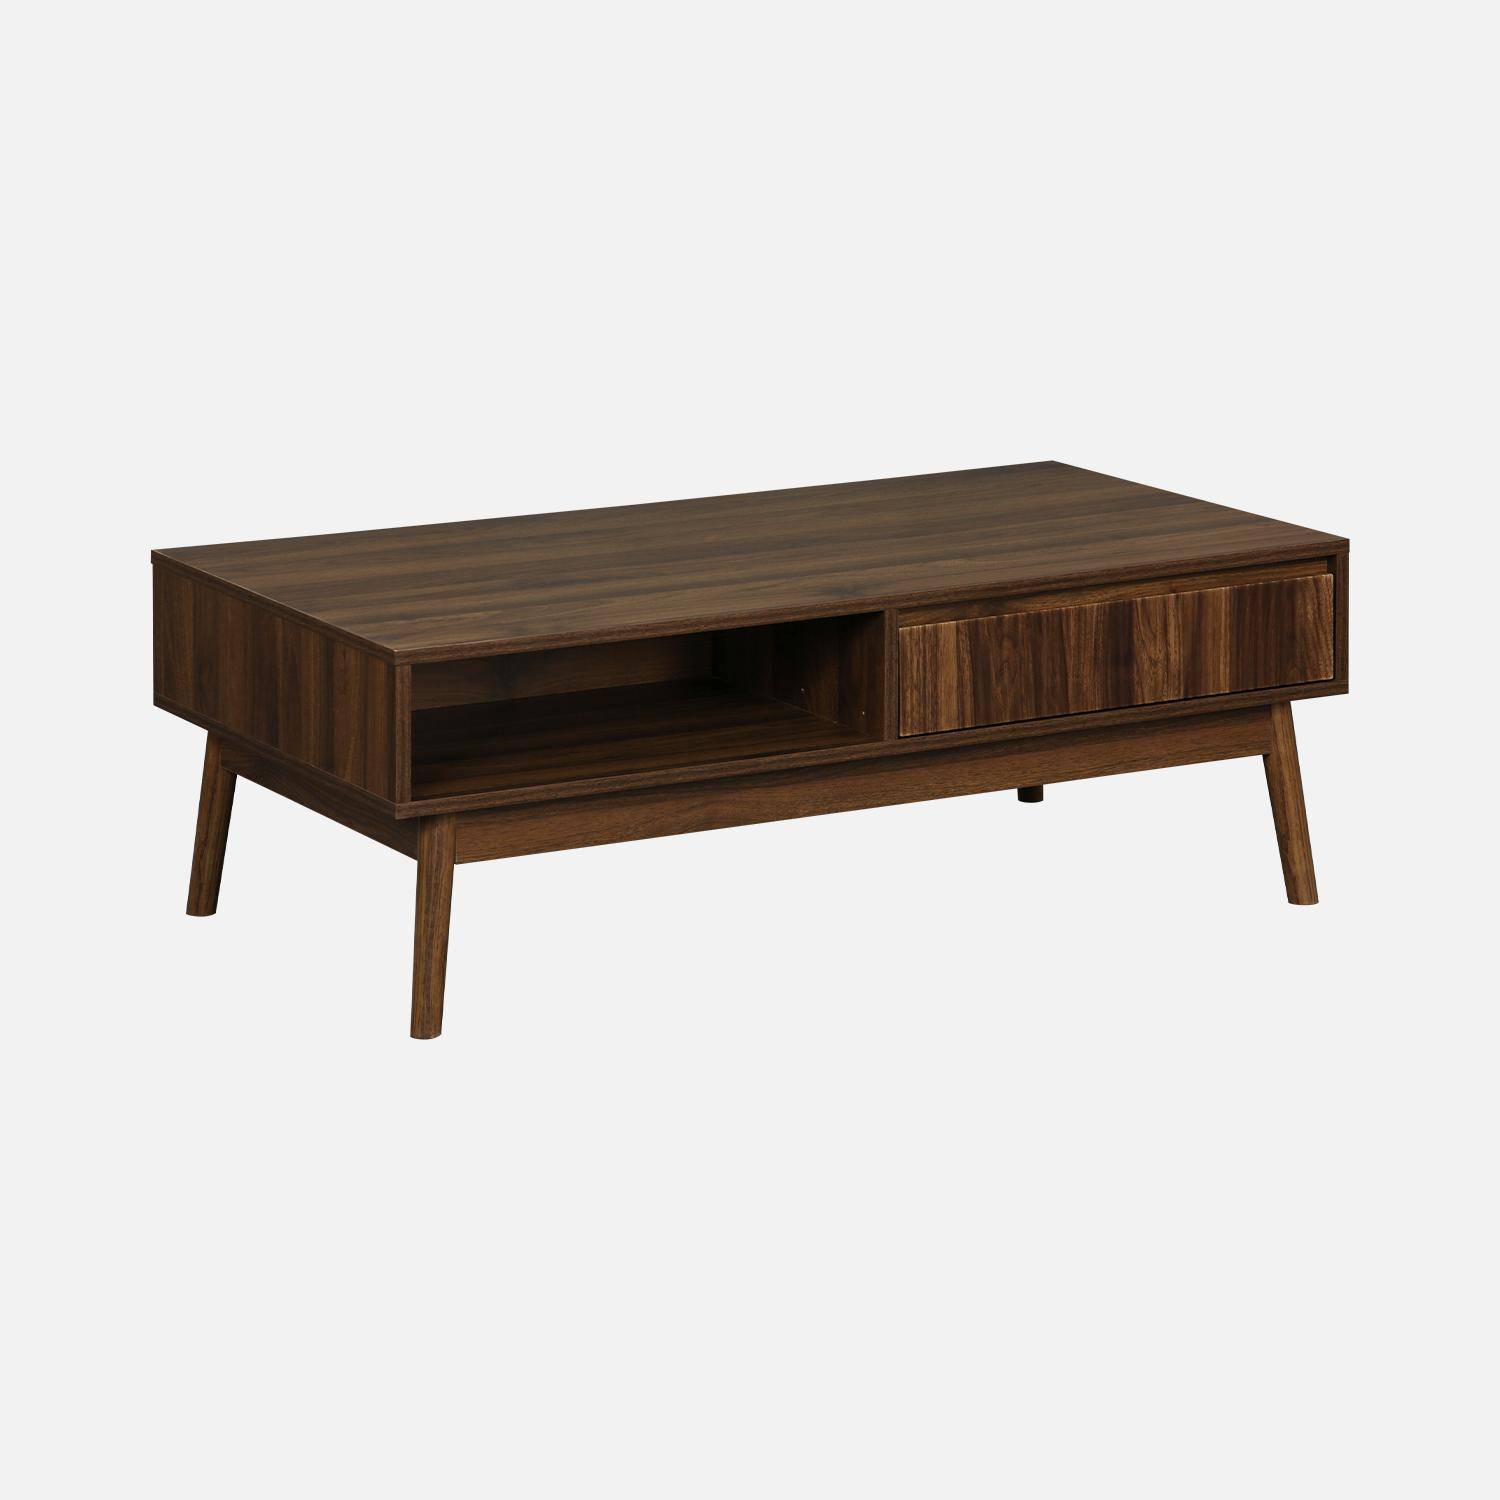 Wooden coffee table with one drawer storage, dark wood, L110xW59xH39cm,sweeek,Photo4